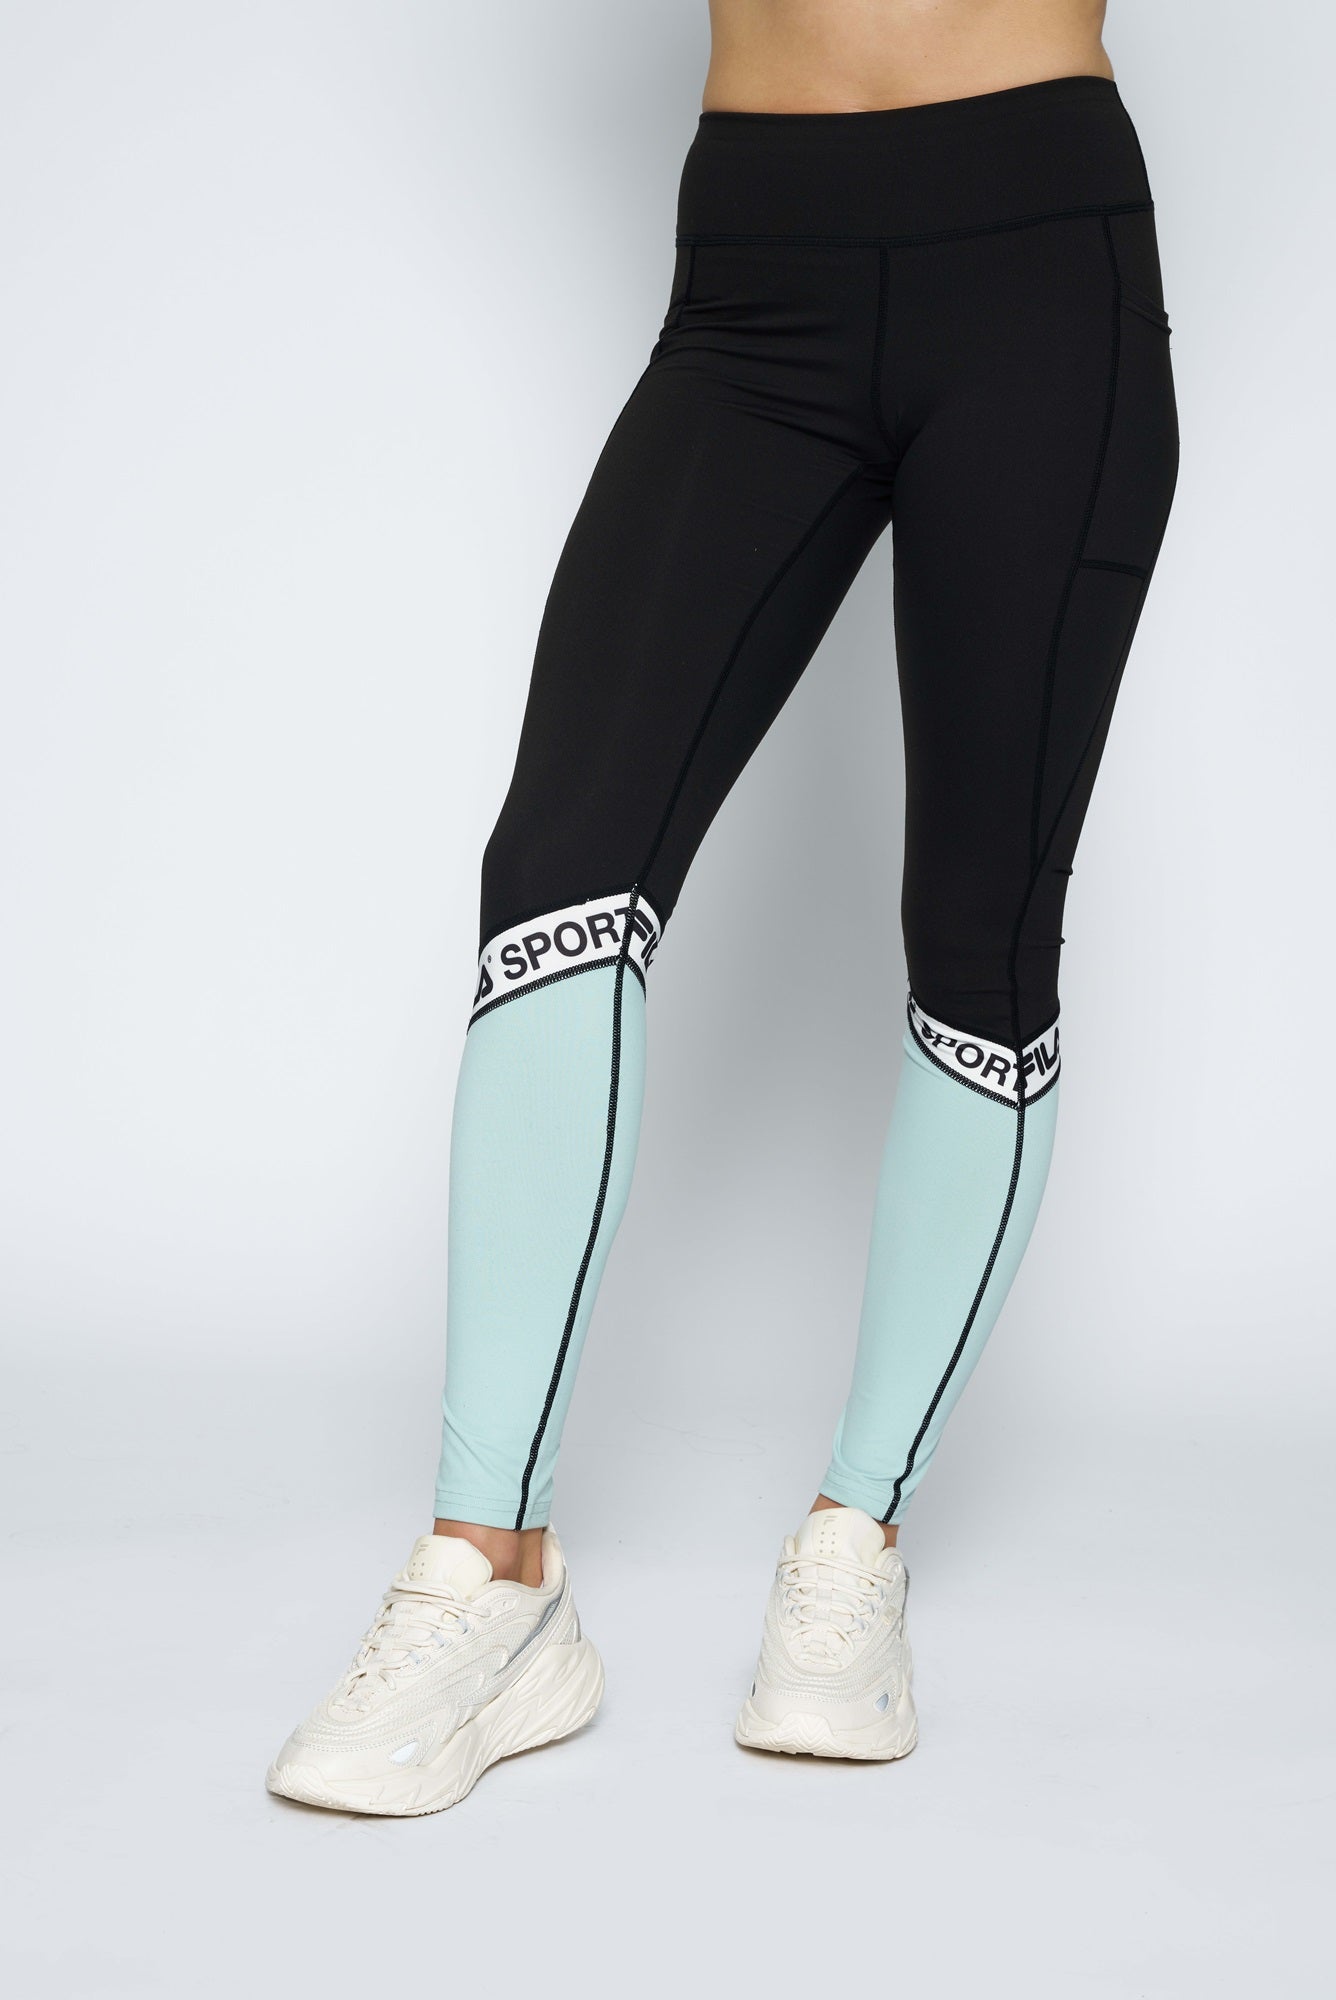 Fila | Pants & Jumpsuits | Fila Sport Leggings | Poshmark